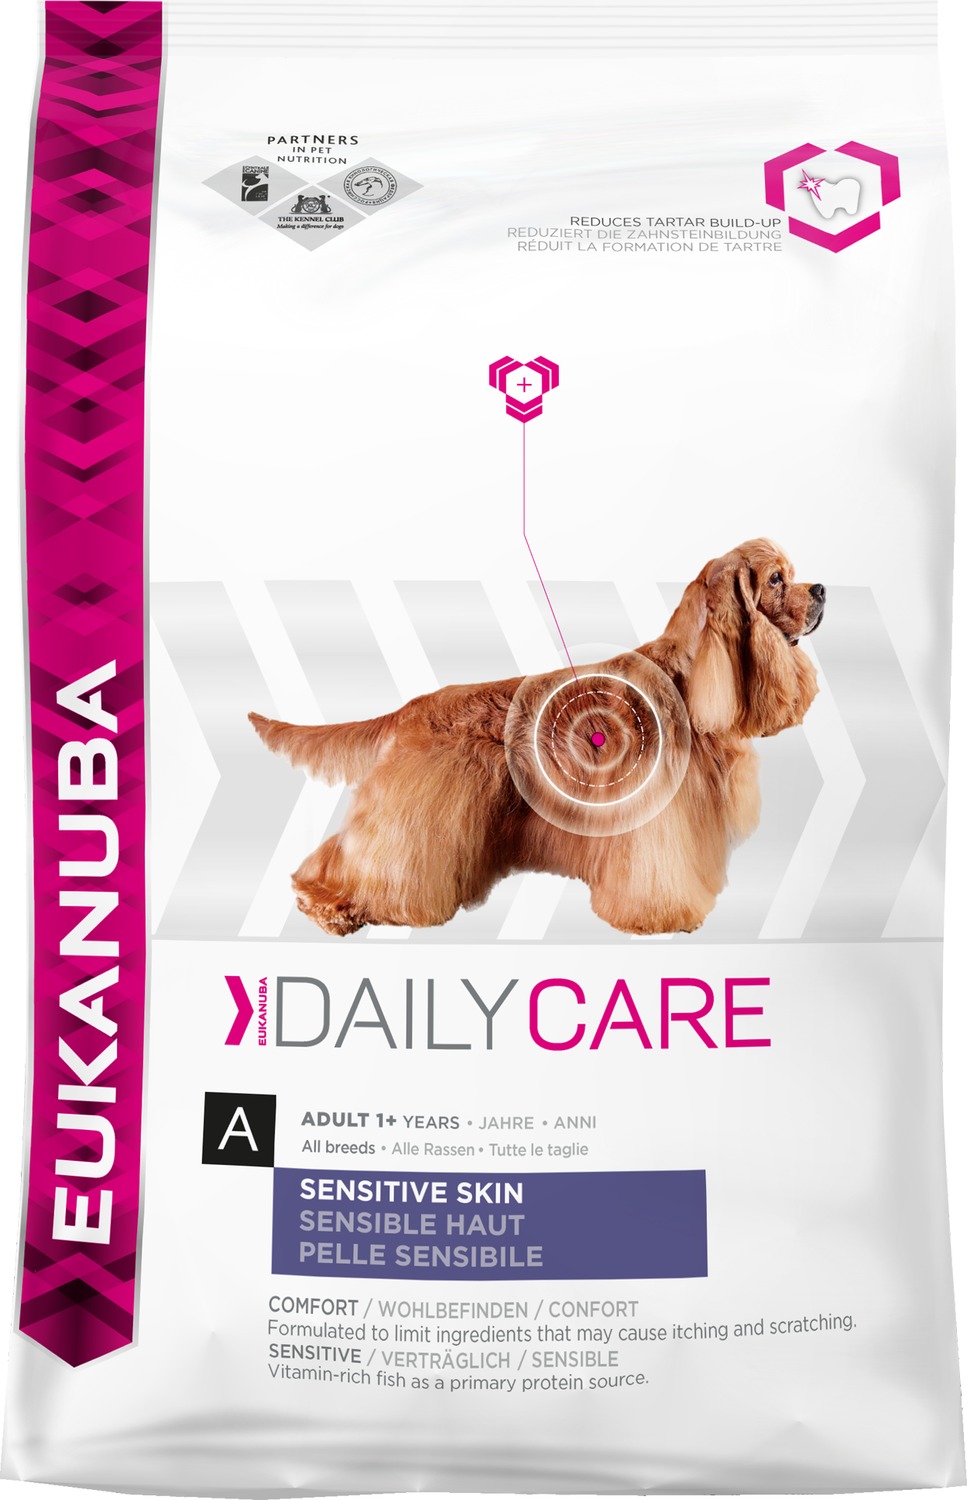 Eukanuba Daily Care Sensitive Skin - zoom